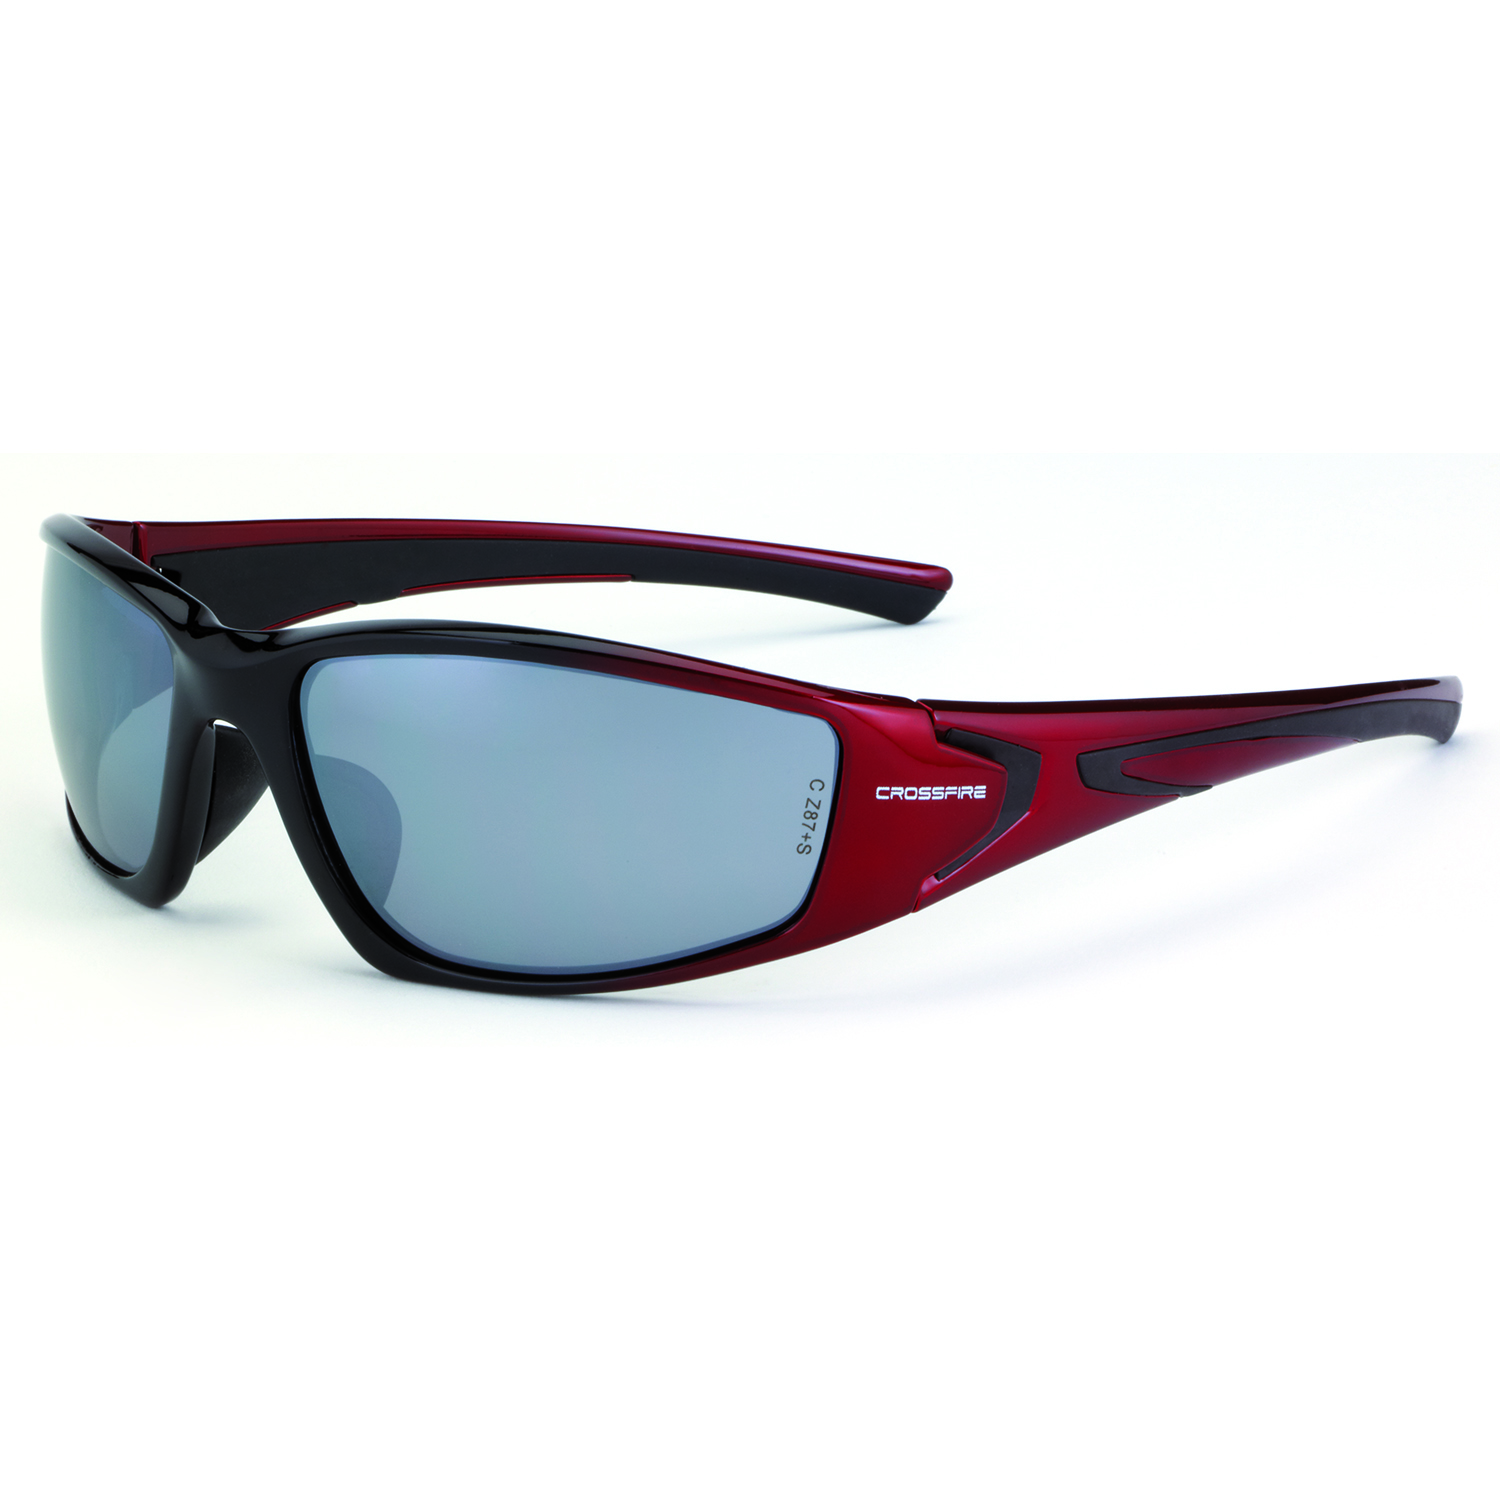 RPG Premium Safety Eyewear - Shiny Black/Pearl Red Frame - Silver Mirror Lens - Mirror Lens